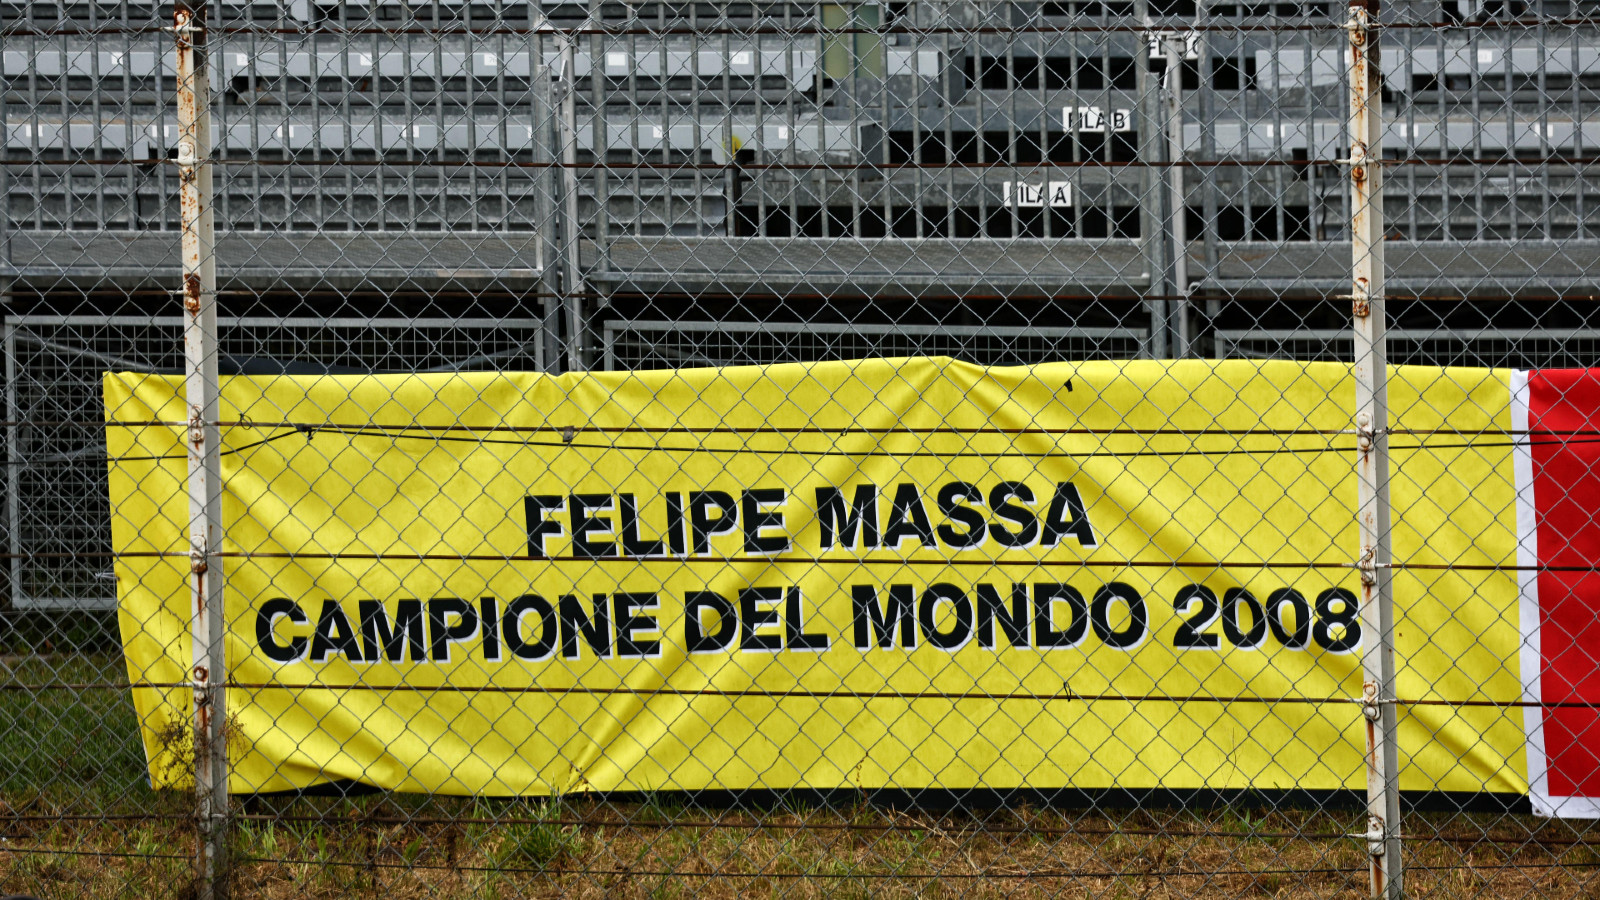 Felipe Massa banner hangs on the fence at the Italian Grand Prix.